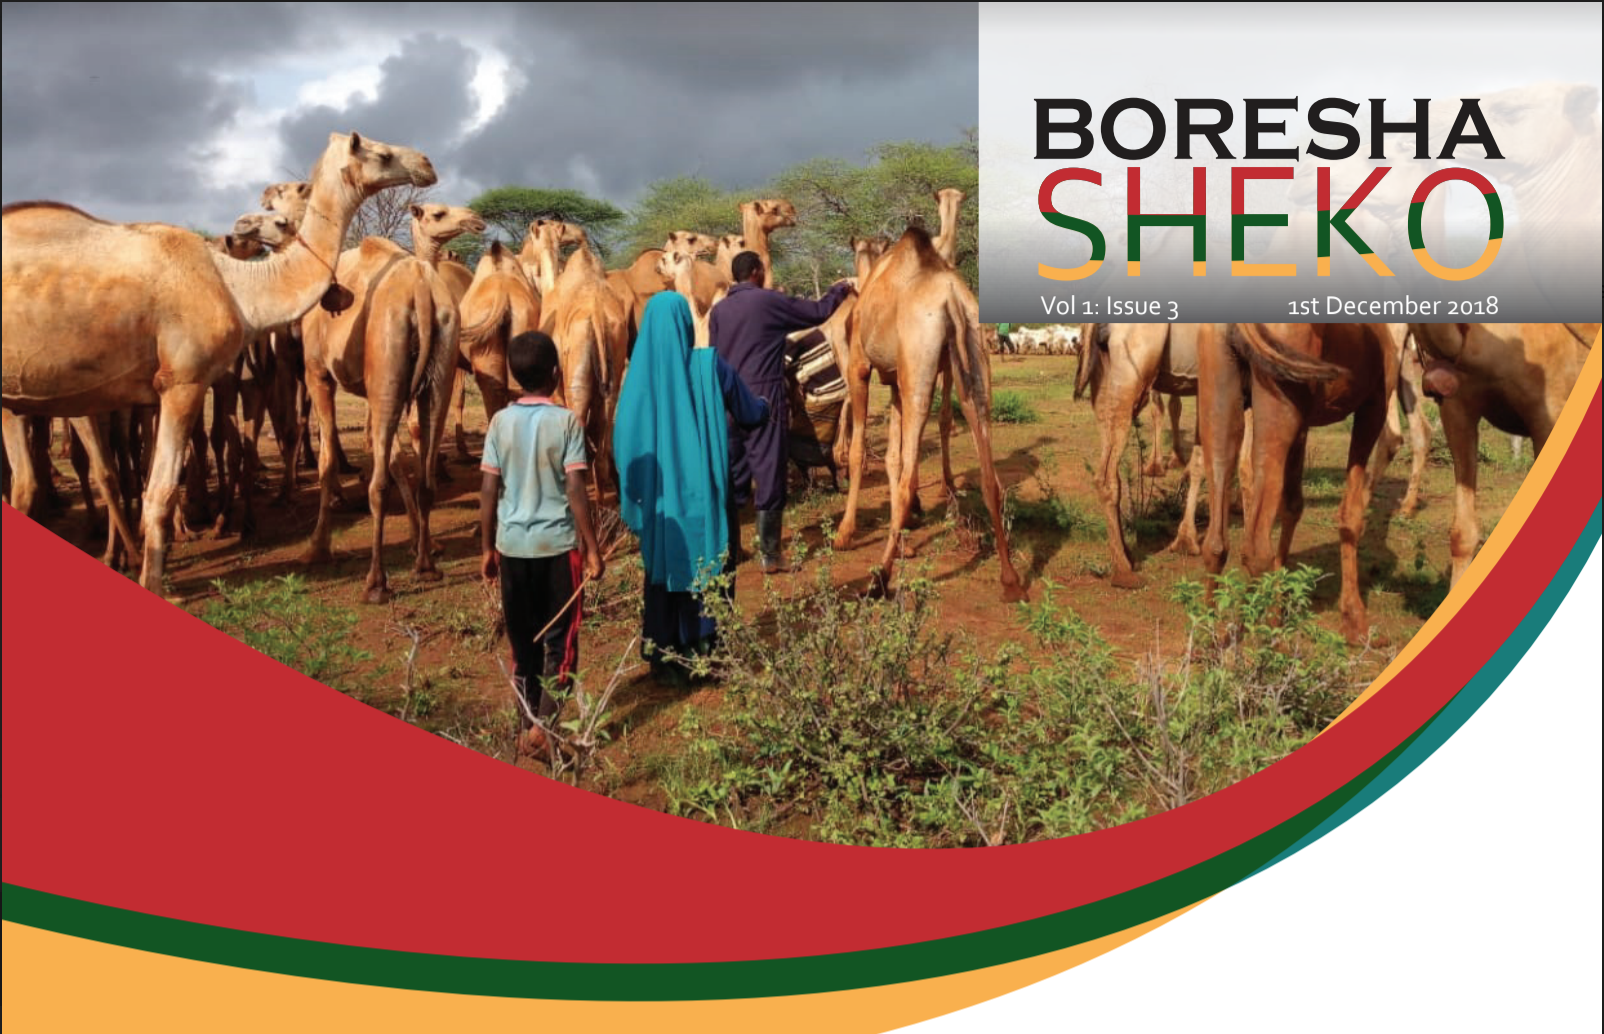 BORESHA-horn-of-africa